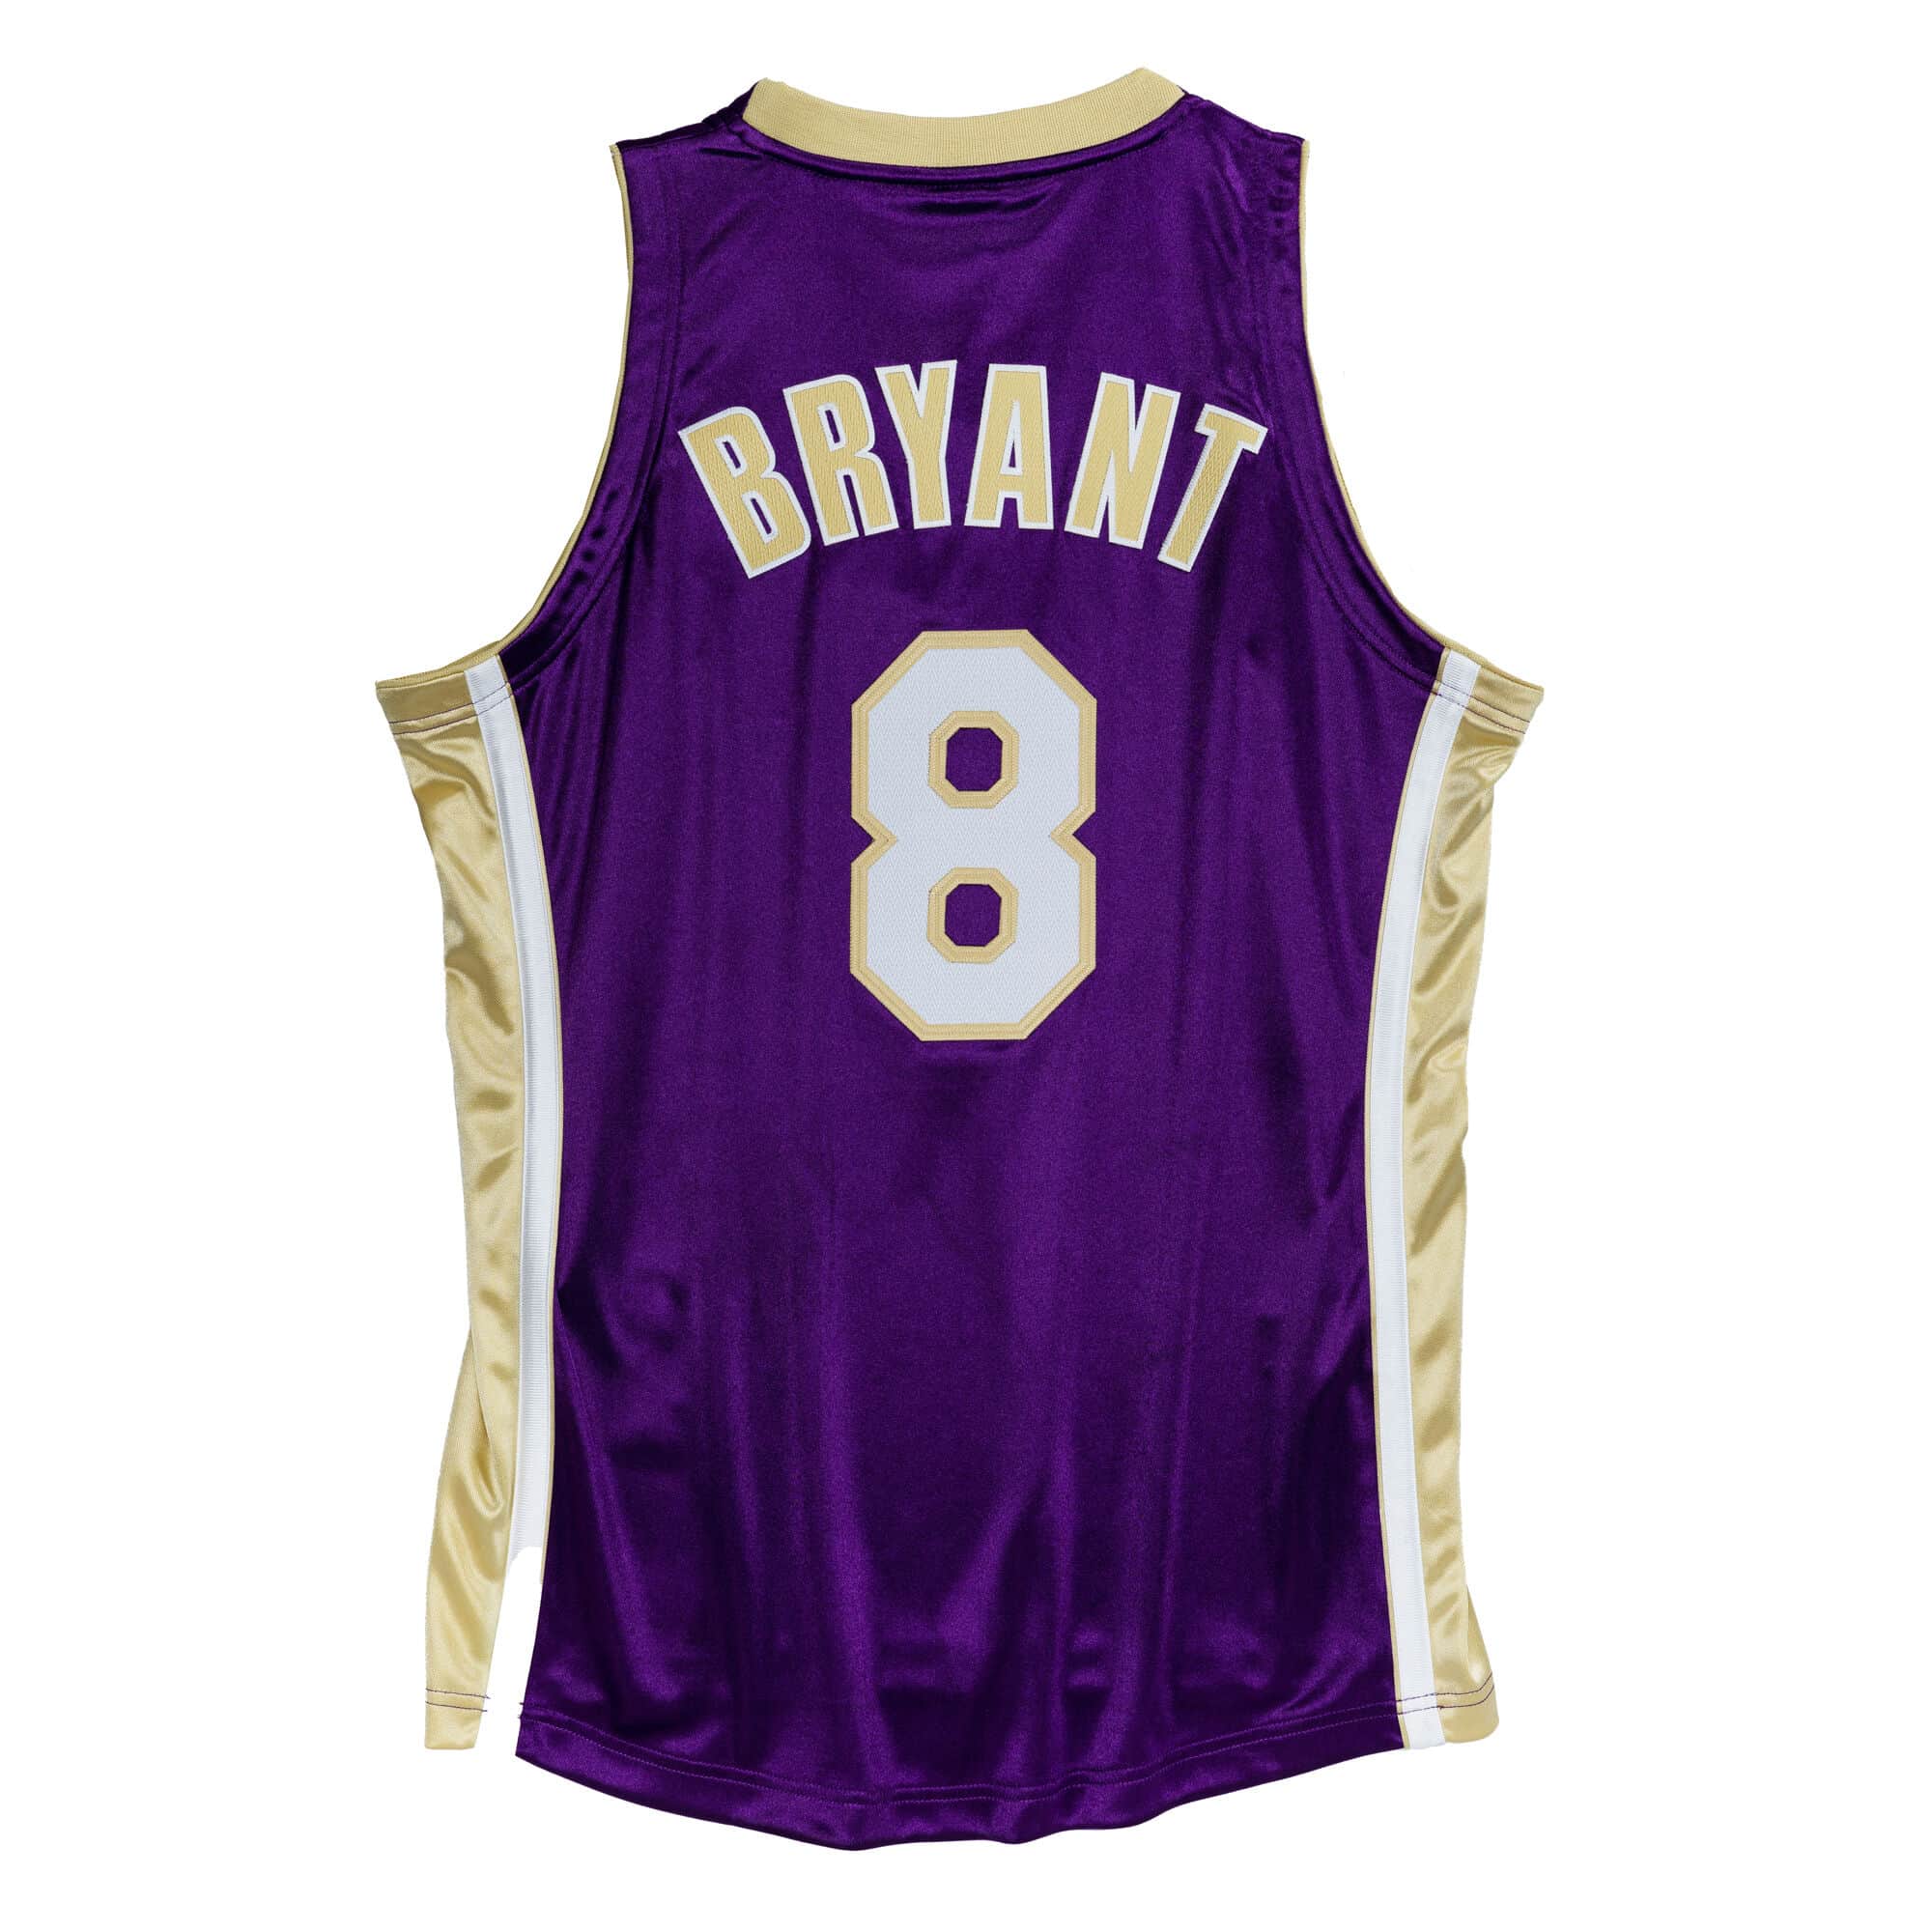 Kobe Bryant Los Angeles Lakers 1996-1997 Blue Authentic Jersey - Rare  Basketball Jerseys